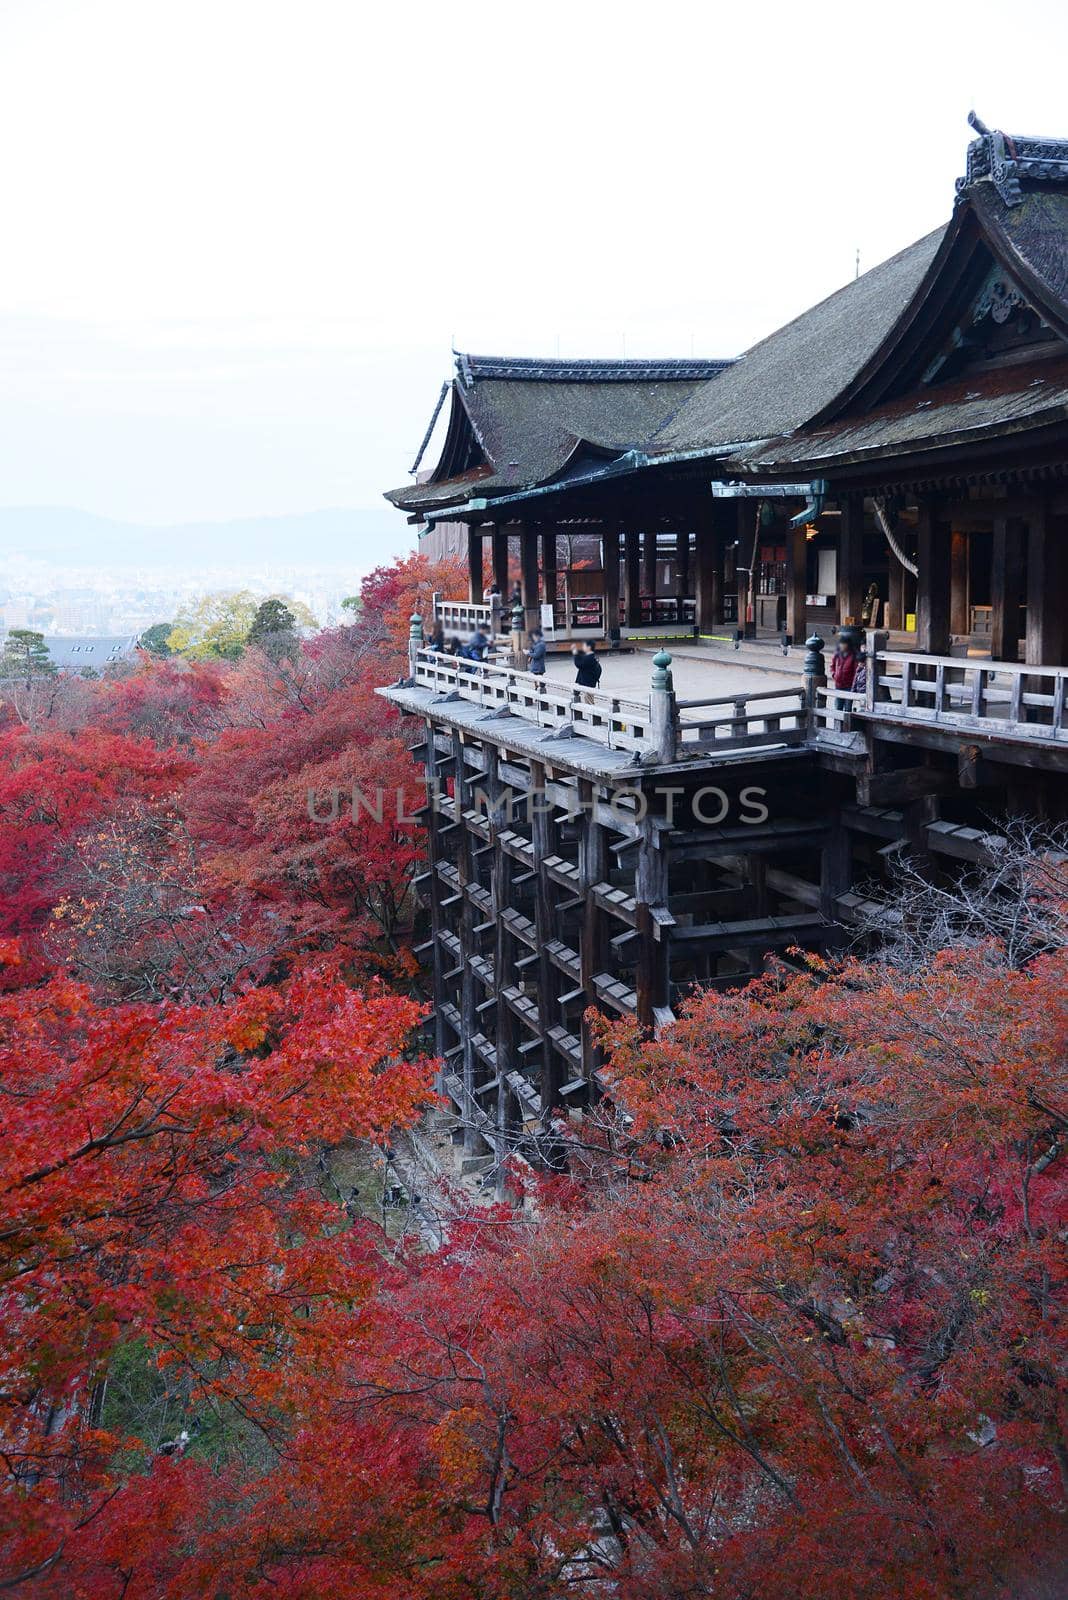 fall foliage in kyoto by porbital